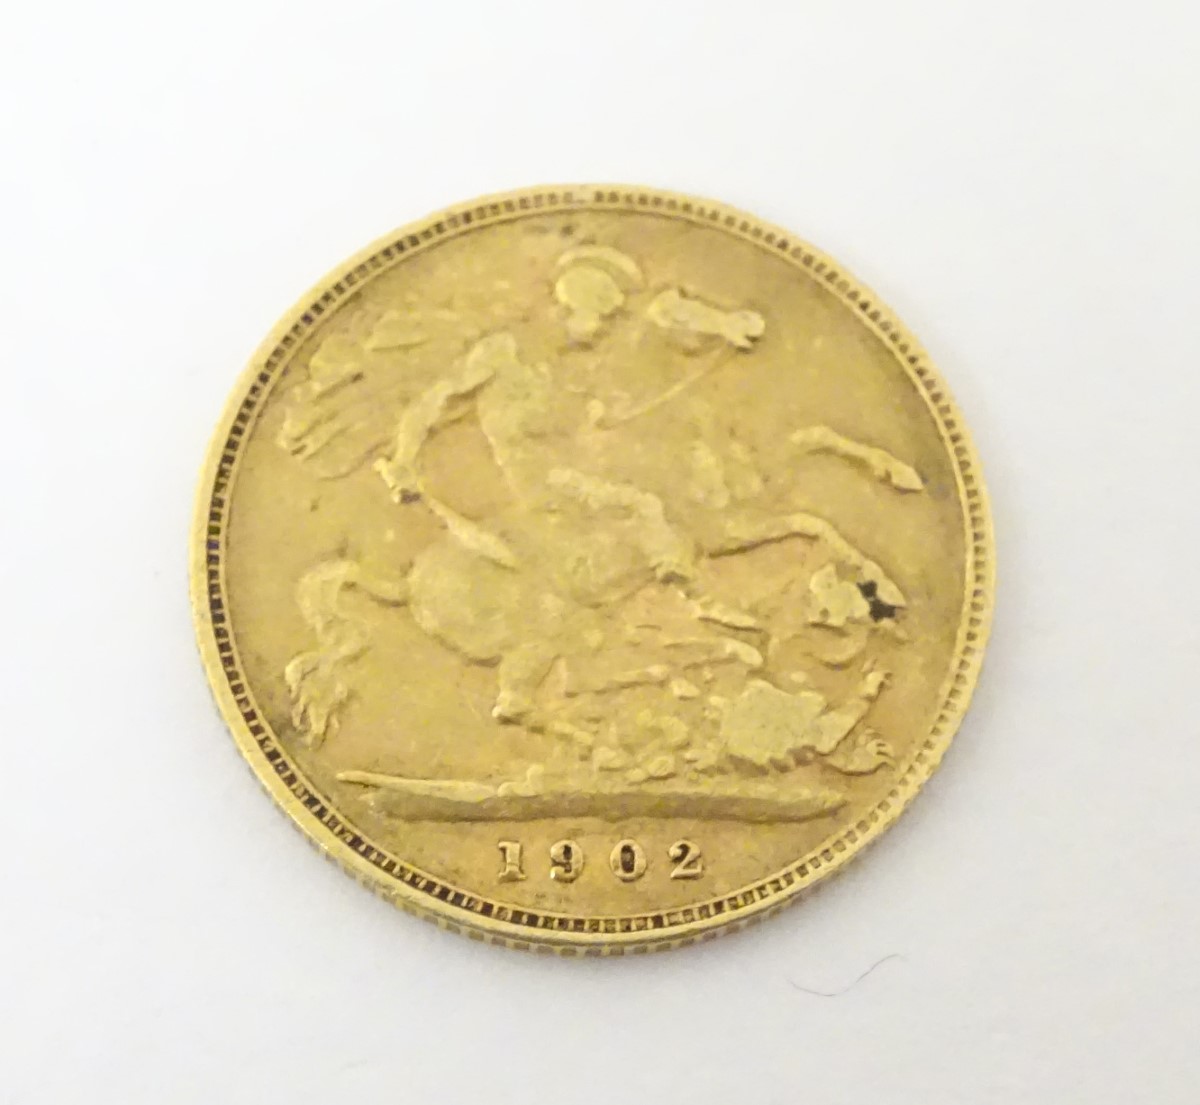 Coin: a 1902 half sovereign, - Image 4 of 4